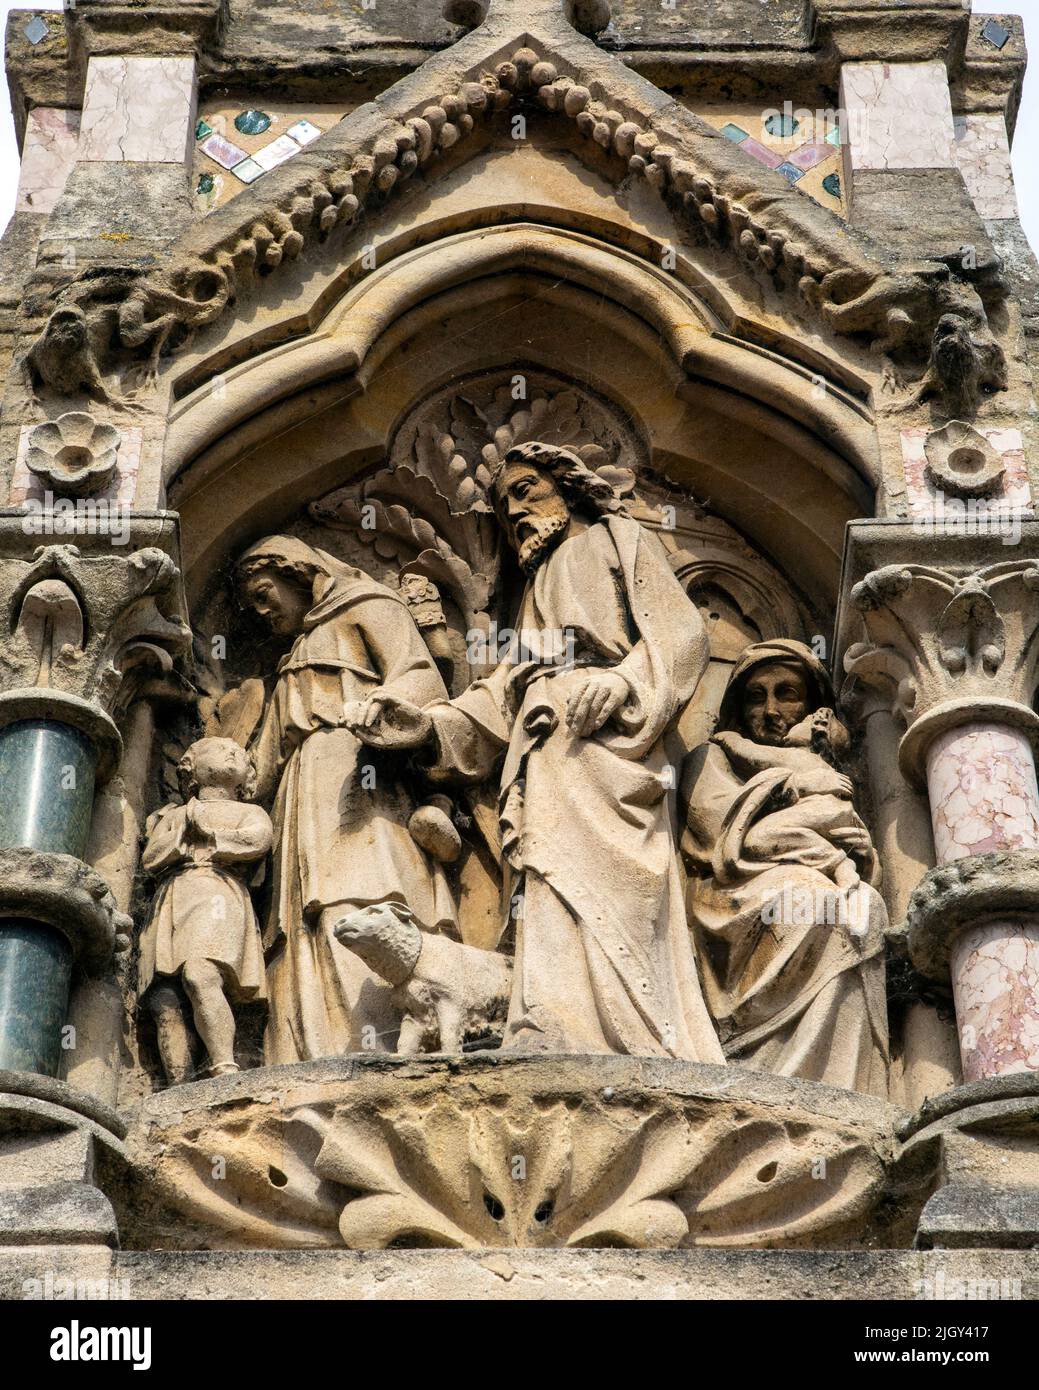 A sculptural detail of the historic Market Cross, located on Market Square in the historic market town of Saffron Walden, Essex, UK. Stock Photo